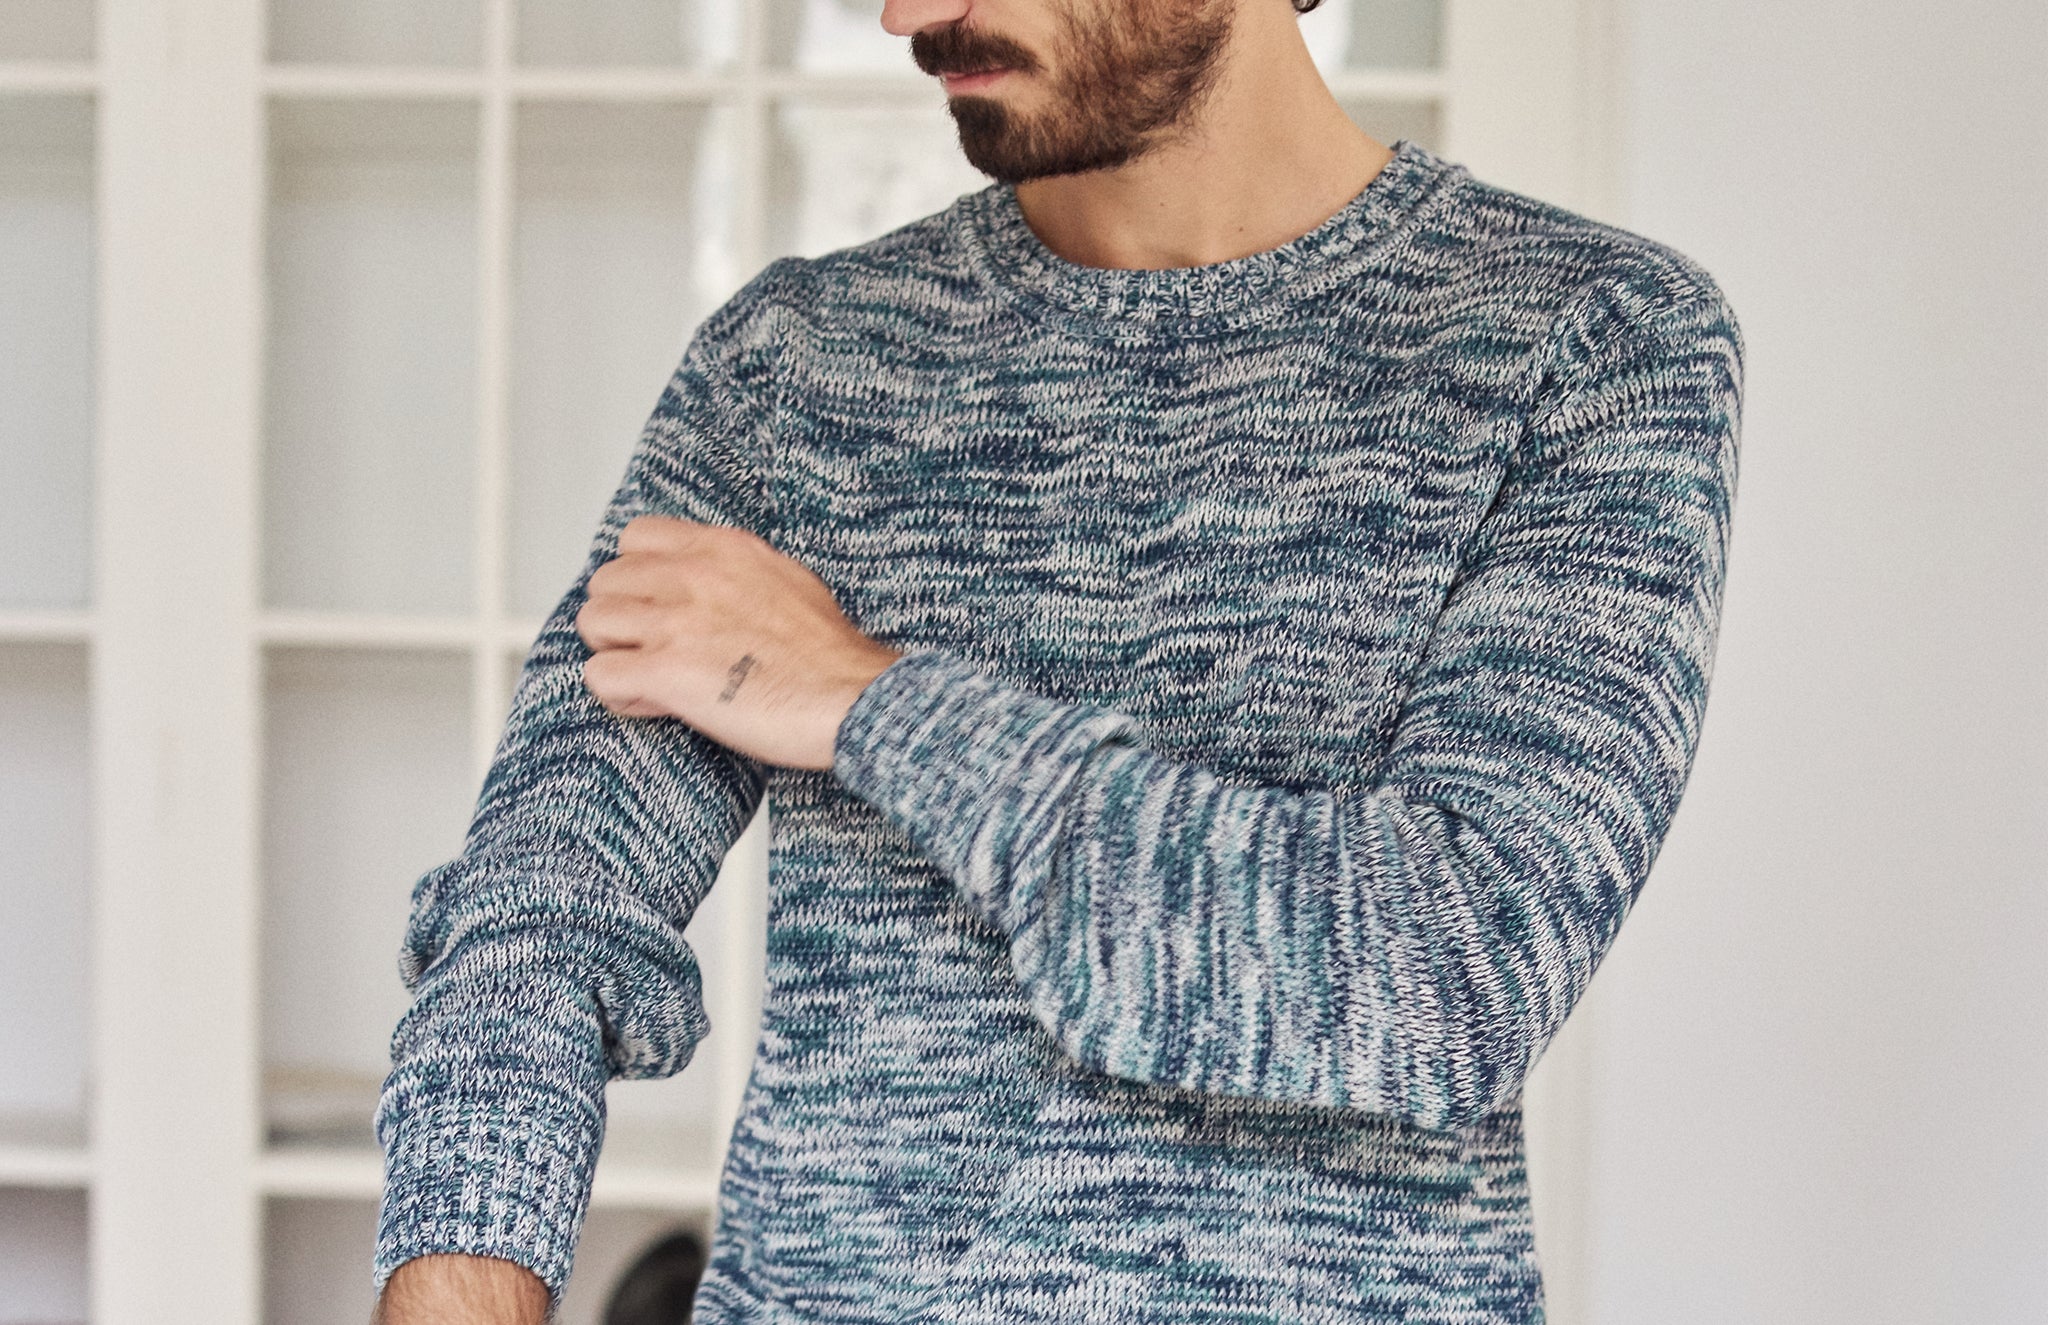 Wool-blend Cable-knit Sweater - Blue melange - Ladies